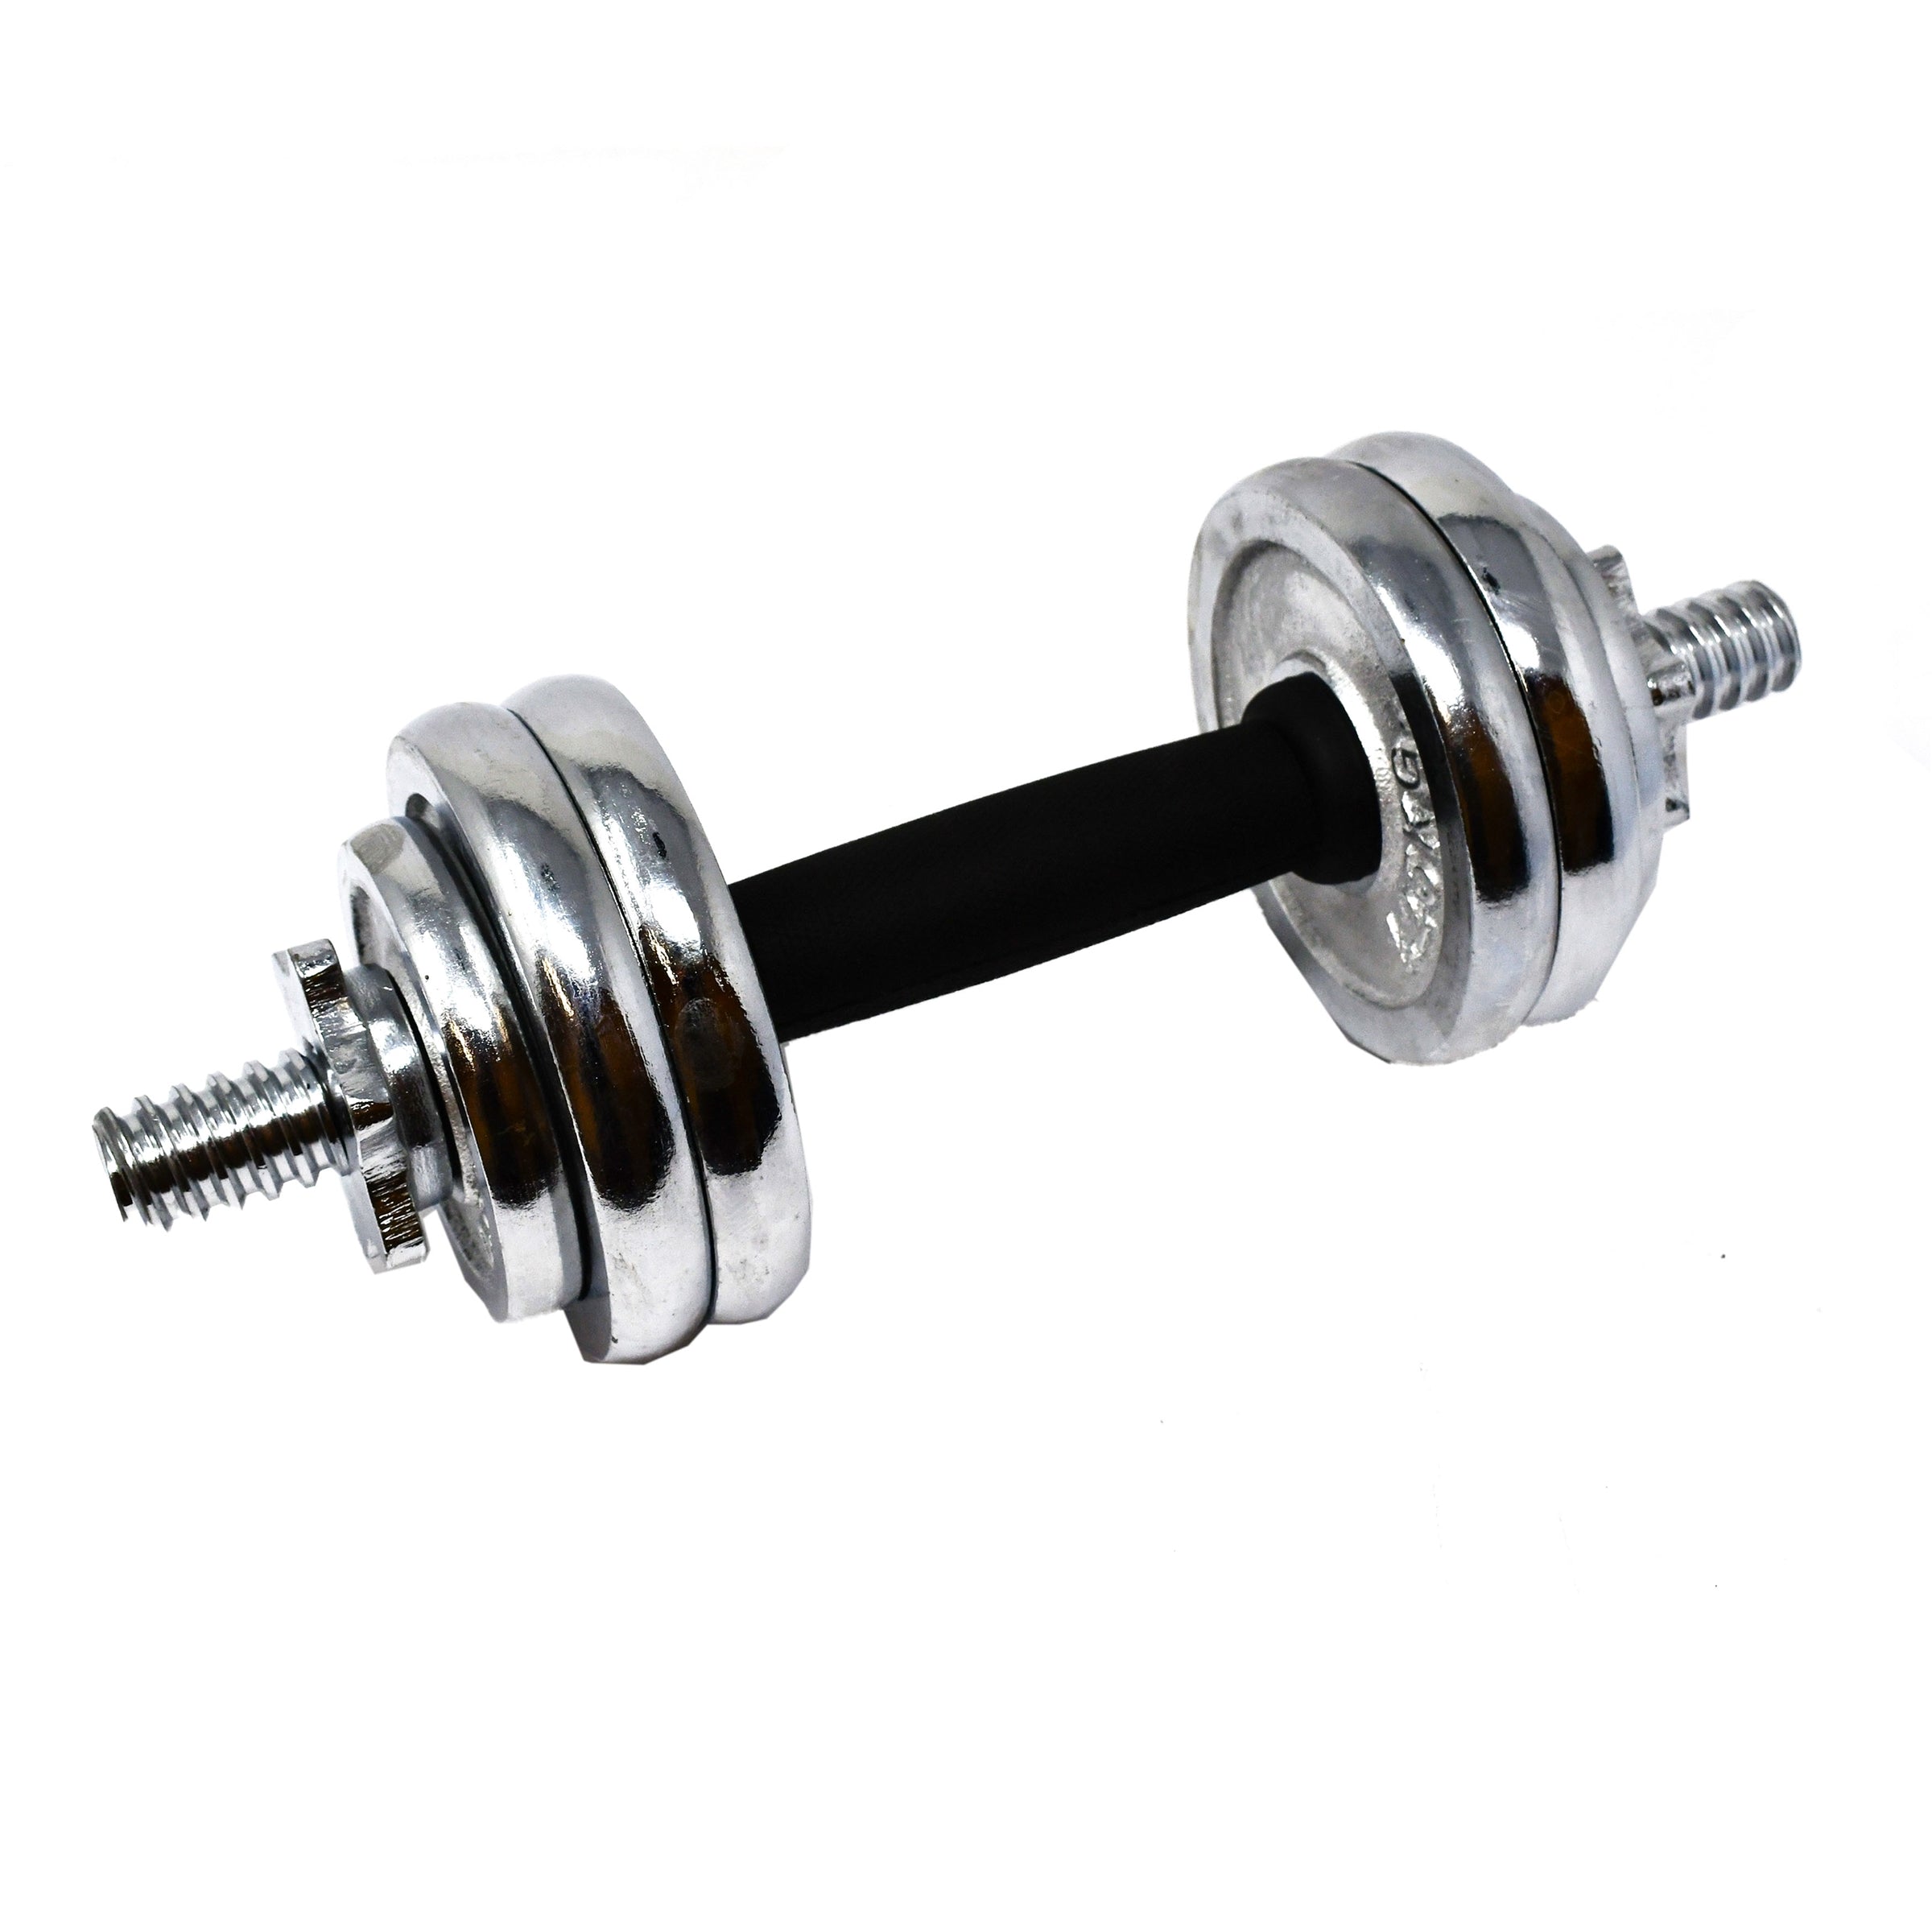 Cast Iron Adjustable Dumbbell Set for Home Gym - 33 lbs (15 kg)